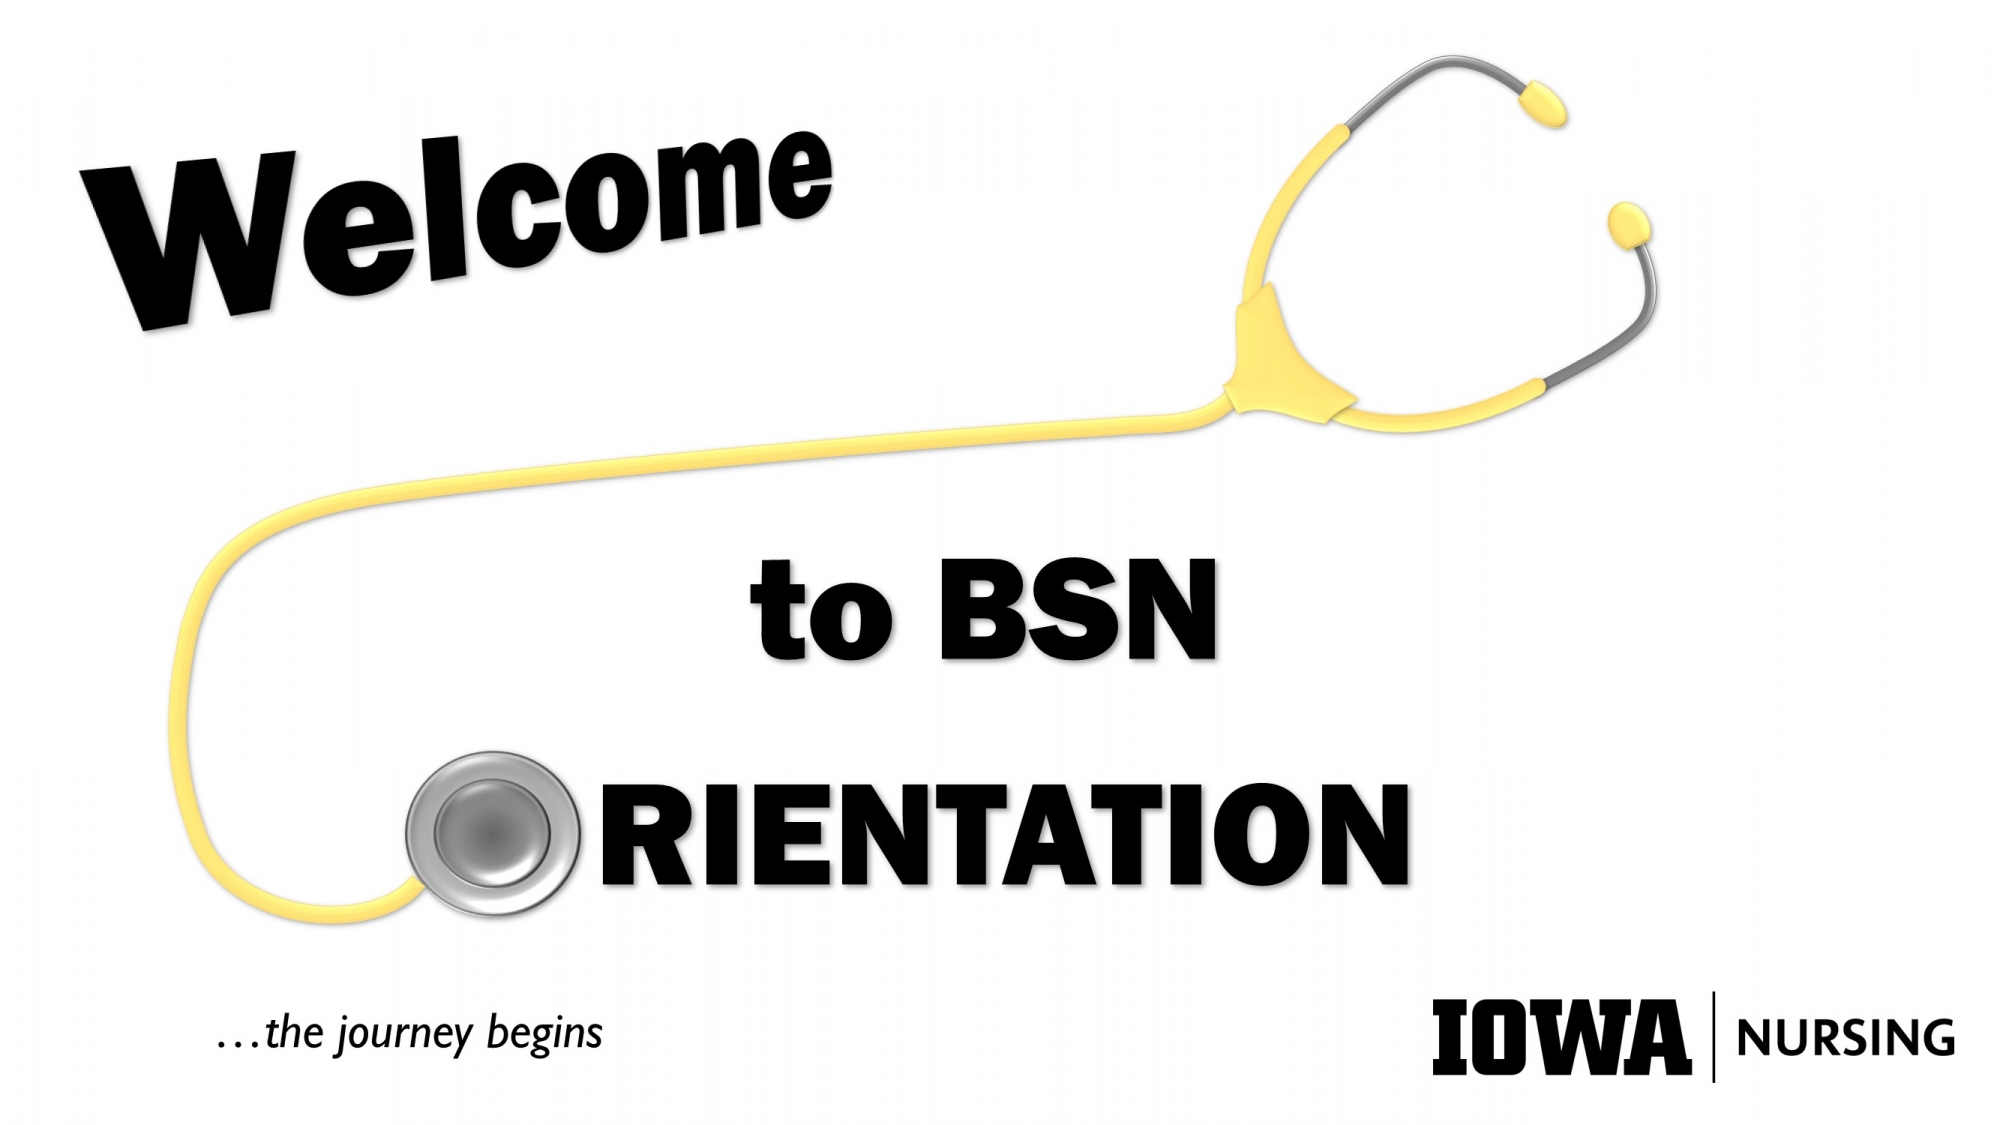 BSN Welcome